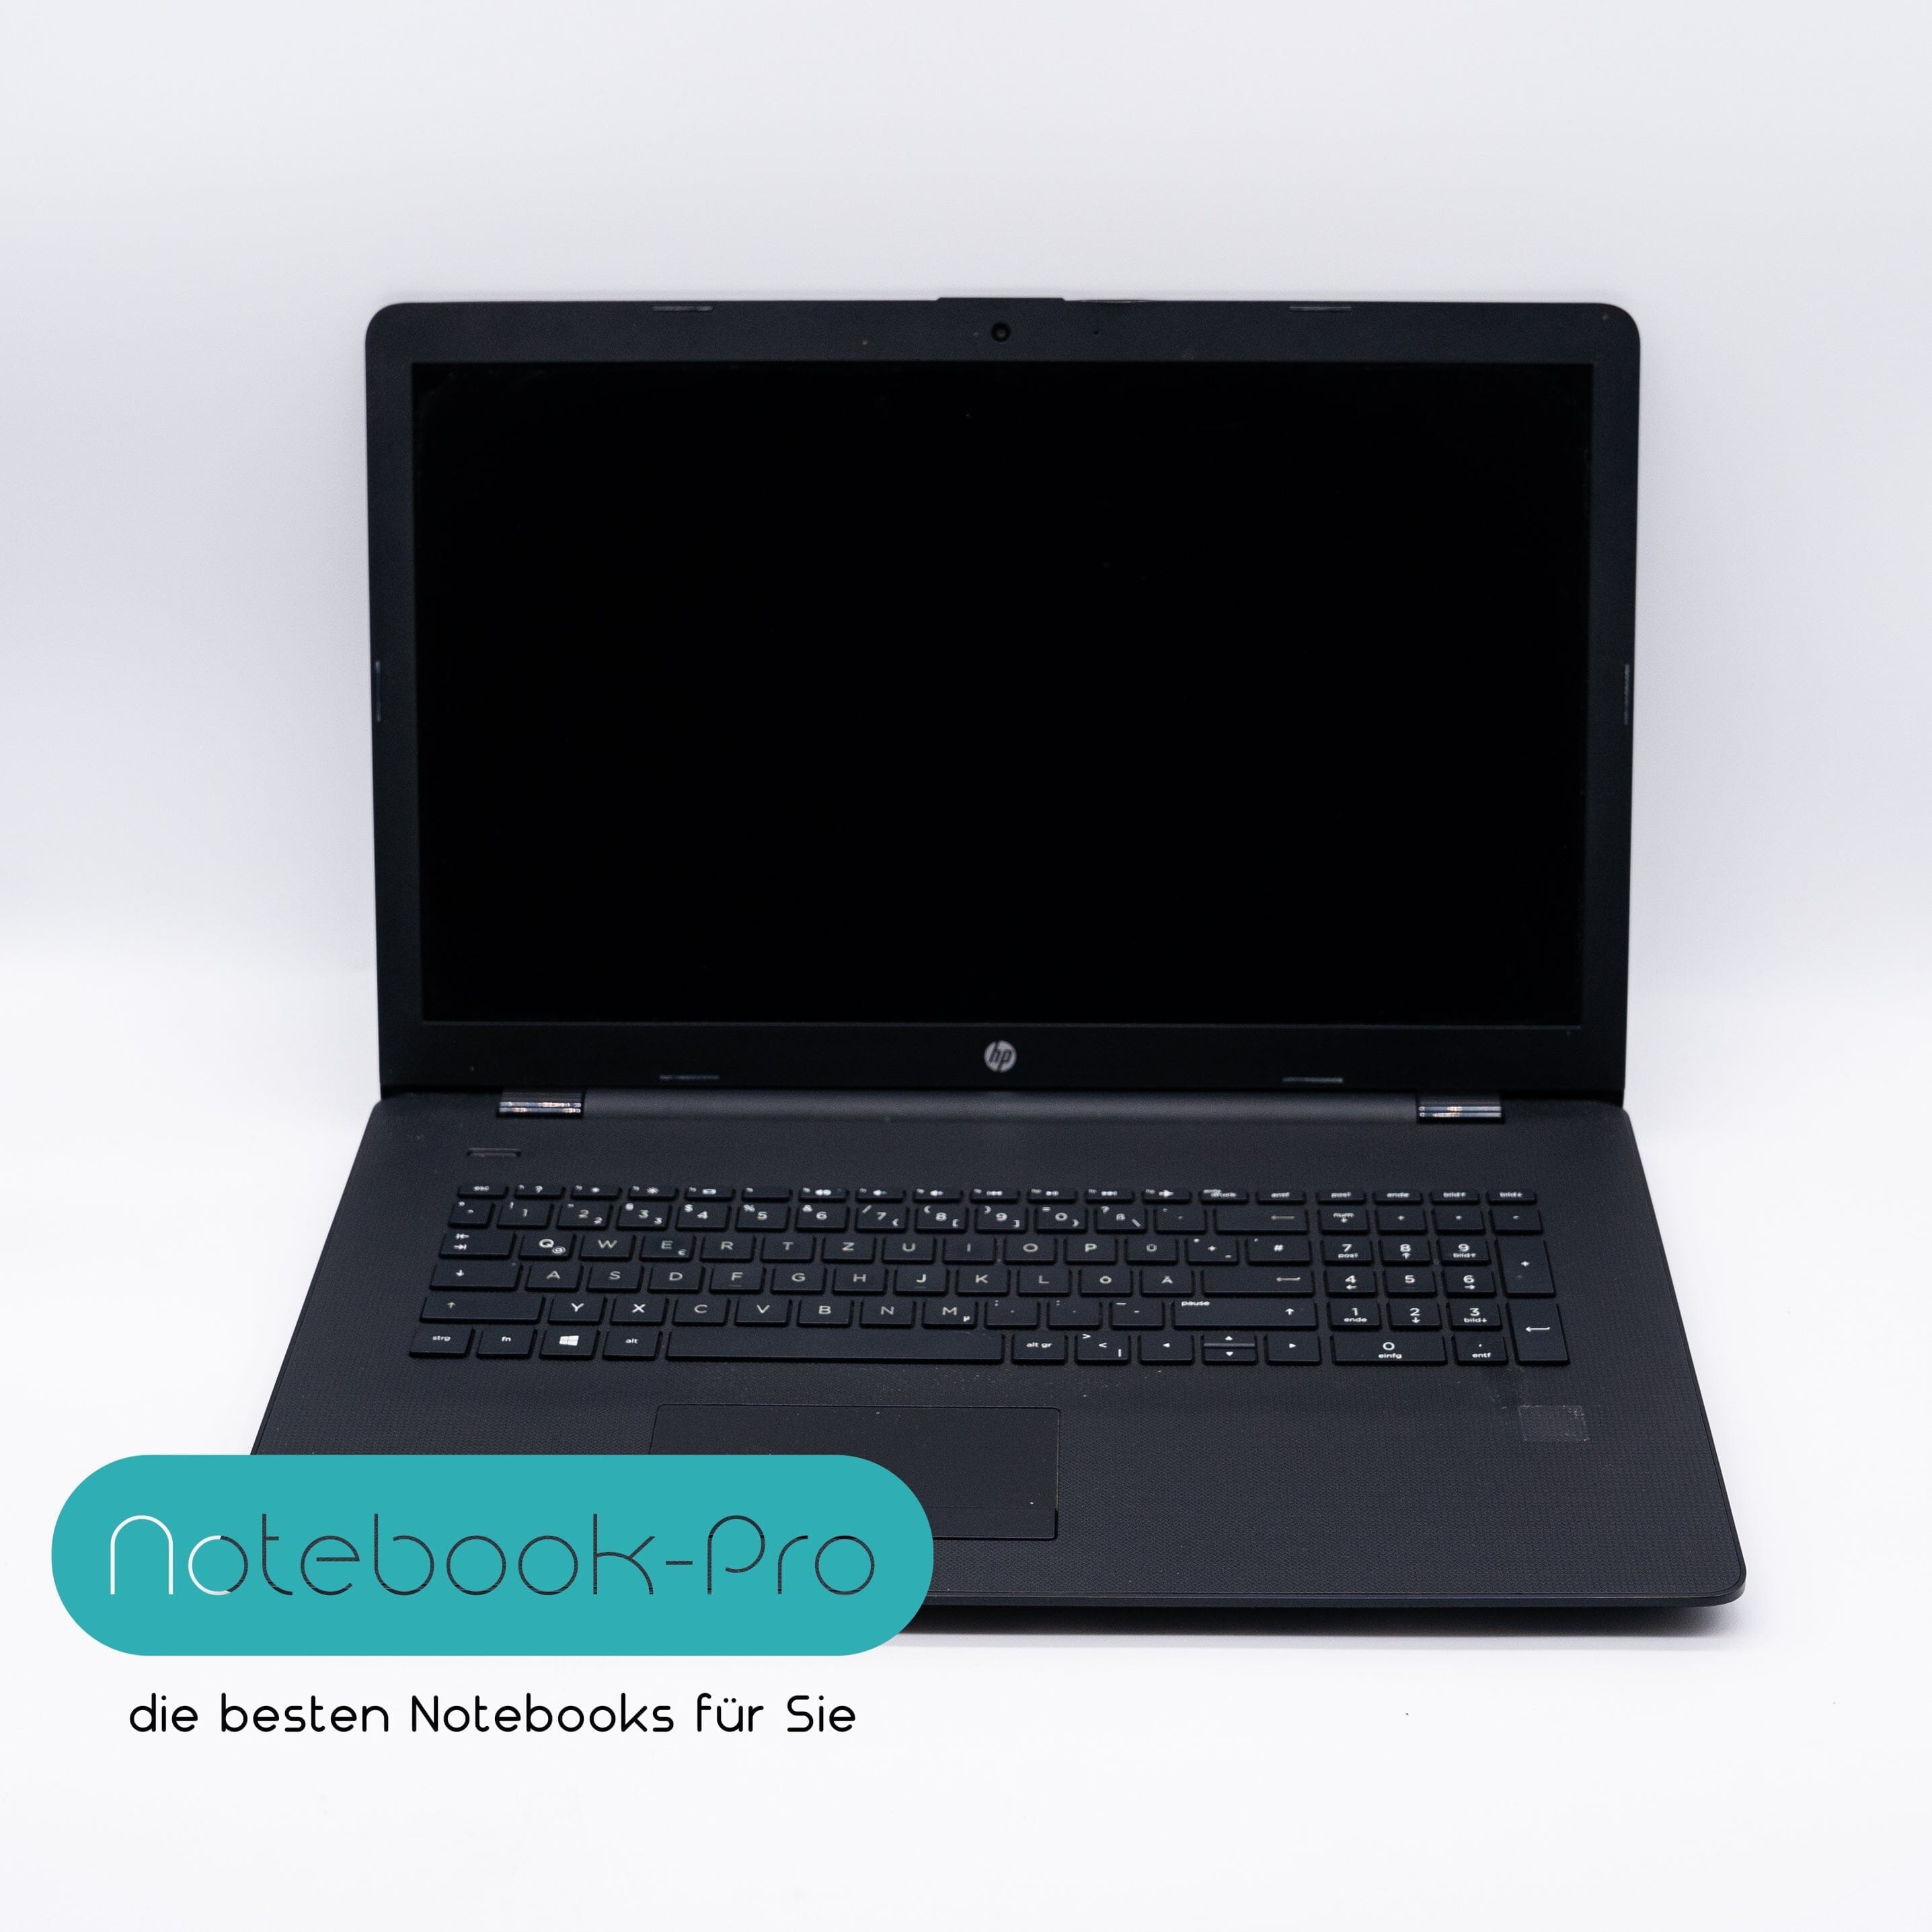 HP Notebook i7-6500U 17,3 Zoll HD+ DVD/RW-Laufwerk 256GB SSD Laptops Notebook-Pro 